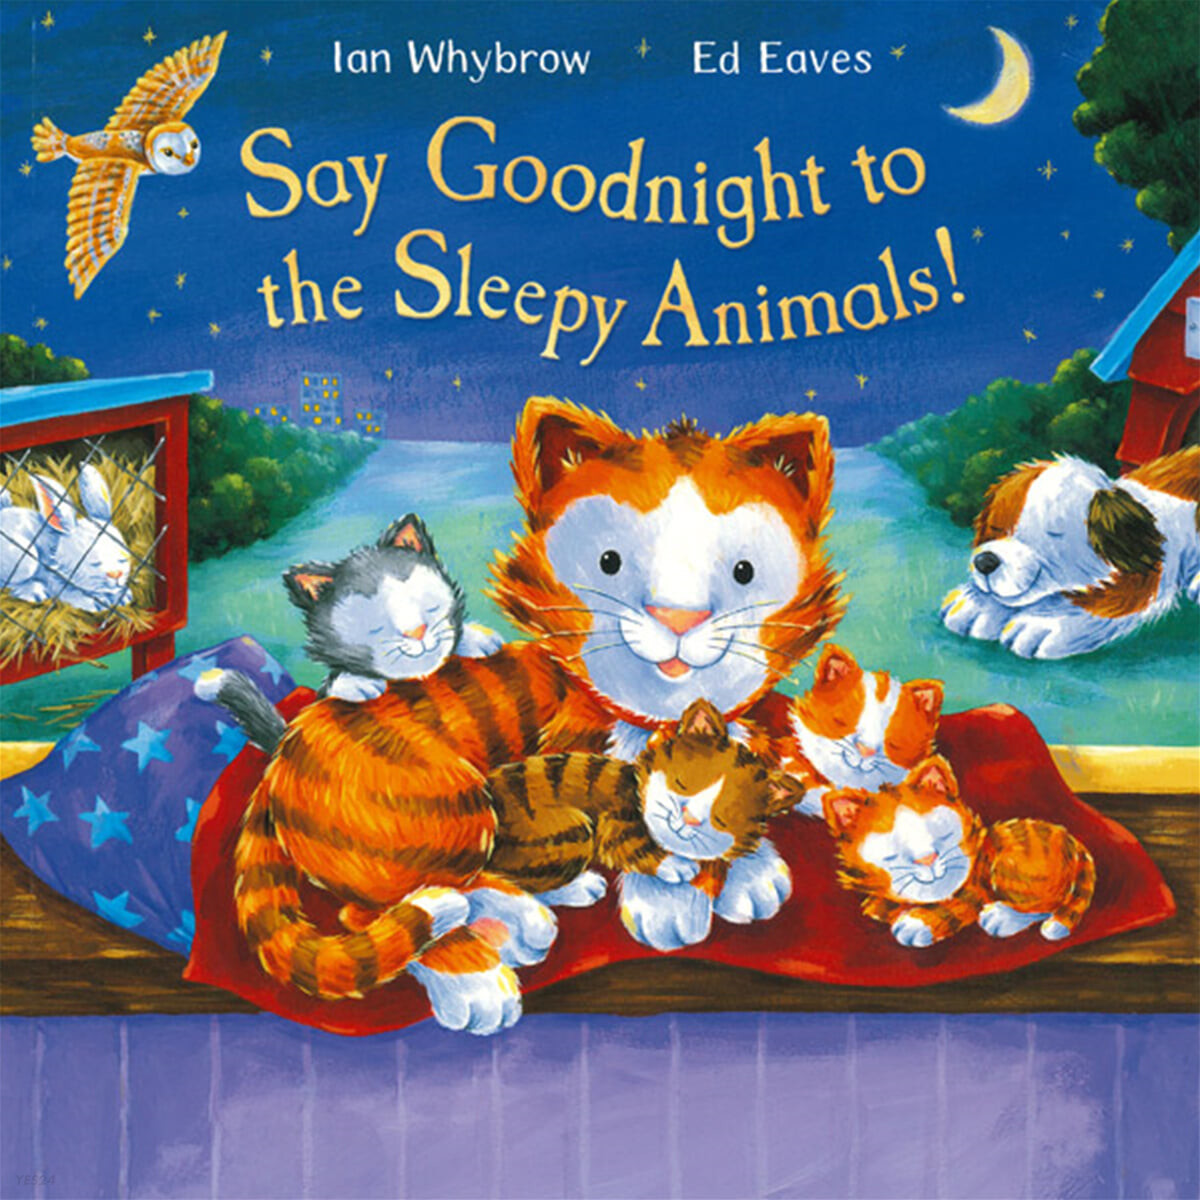 Say goodnight to the sleepy animals!